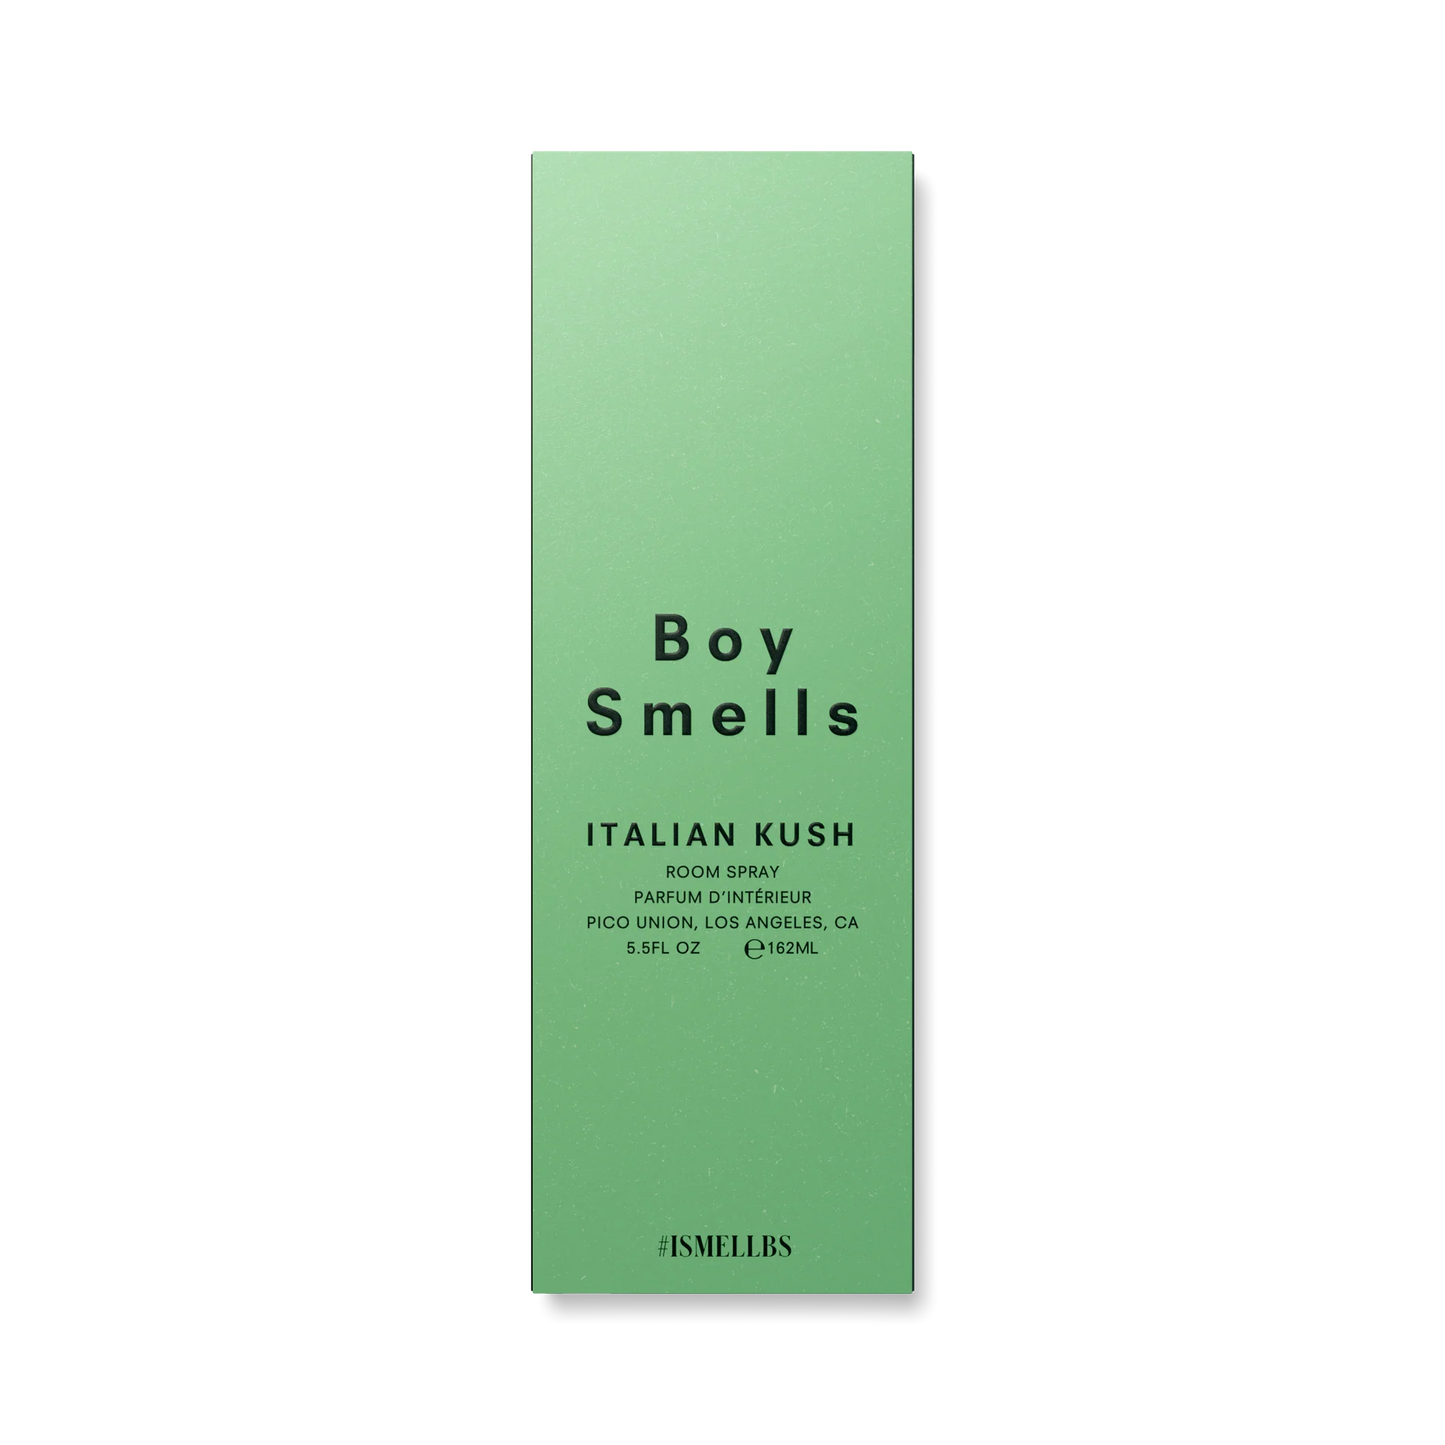 Italian Kush Room Spray | Boy Smells